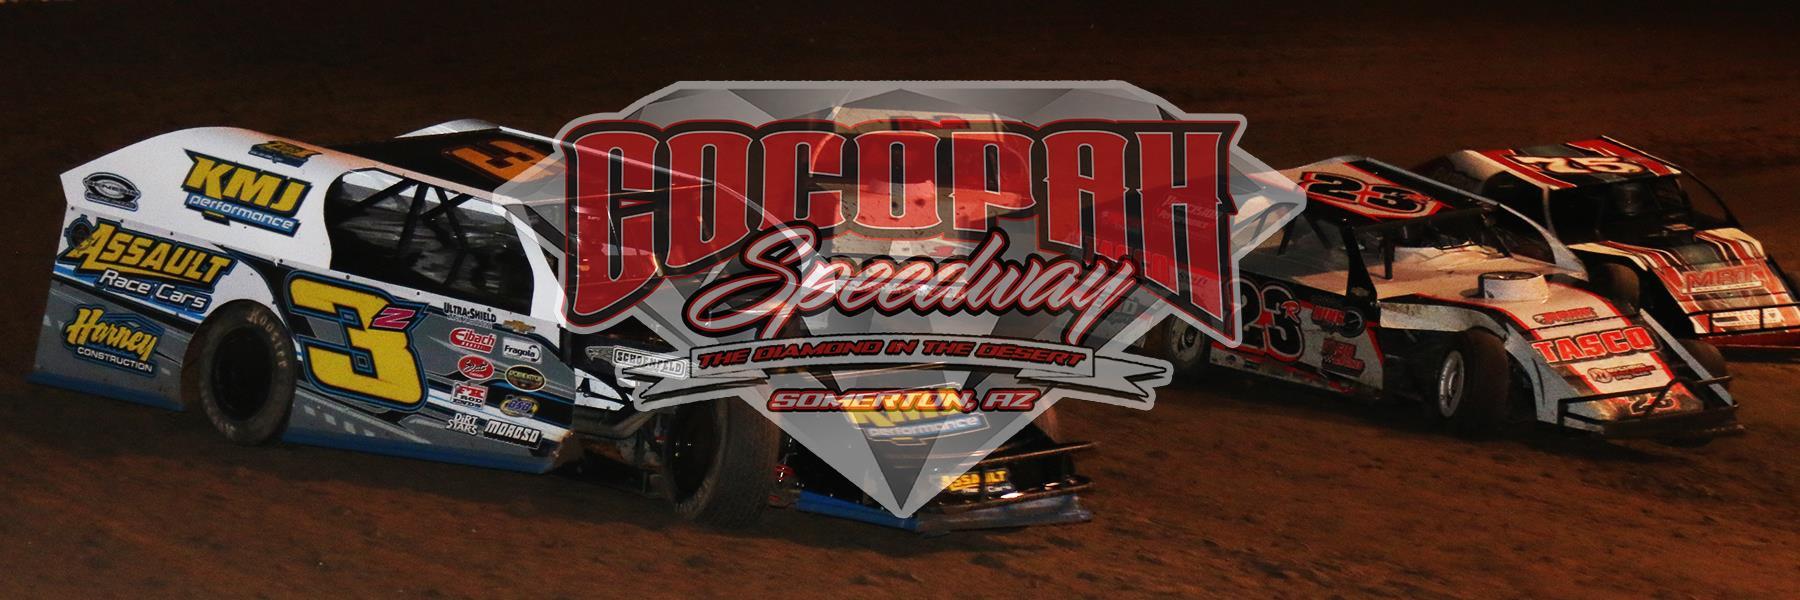 1/14/2023 - Cocopah Speedway